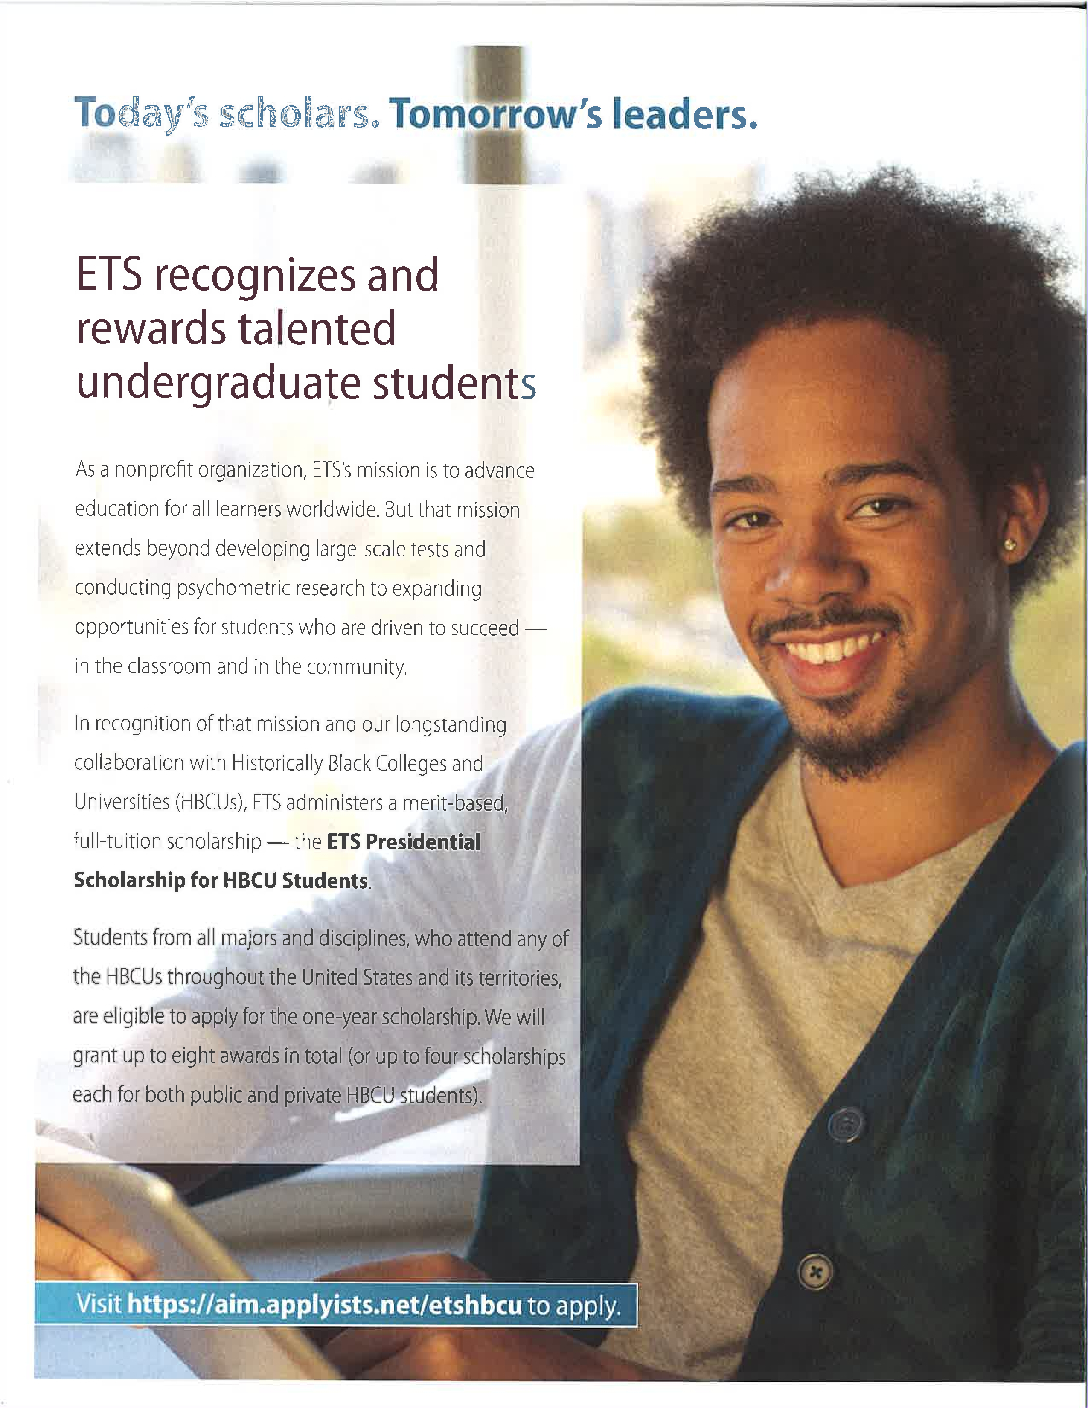 ETS Presidential Scholarship image link